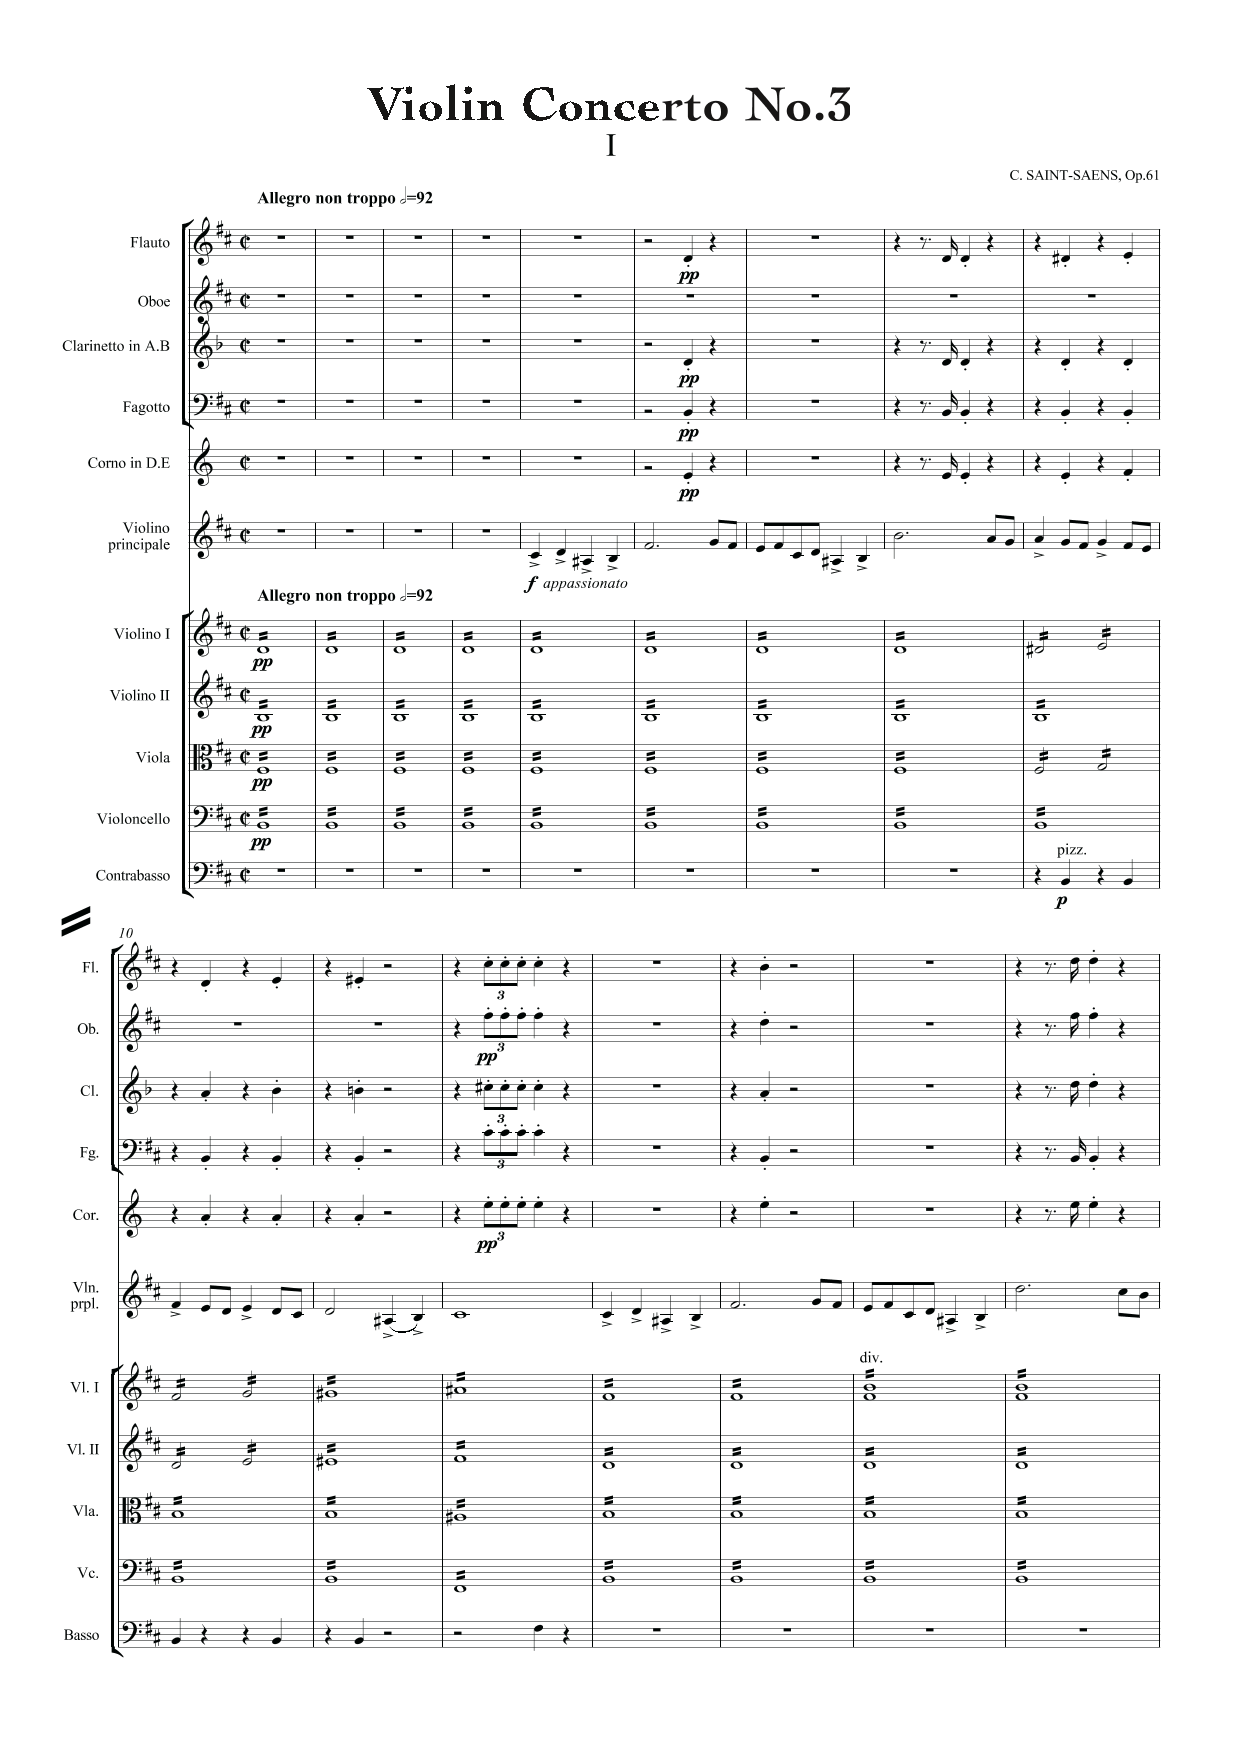 Saint-Saens, Camille: Violin Concerto No. 3 in B minor, Op. 61 (arr. for String Quintet & Wind Quintet) (AEGC14)